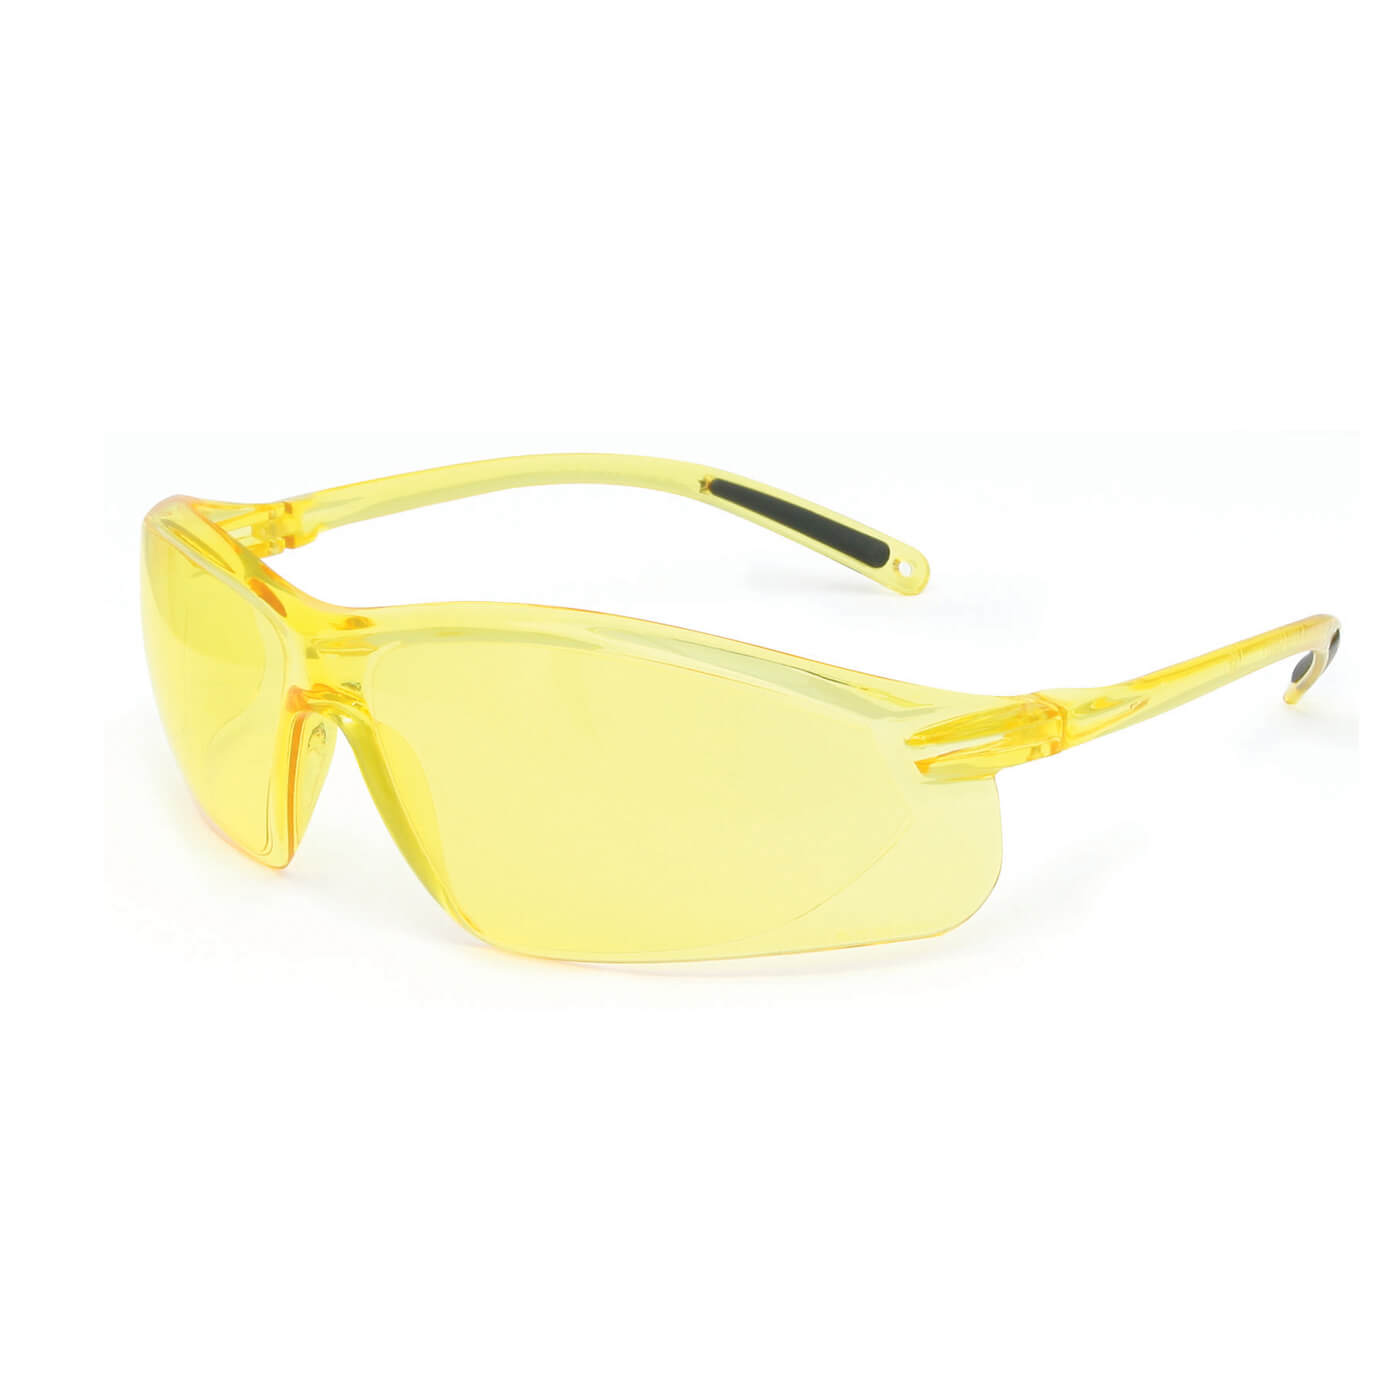 Okulary ochronne Honeywell A700 żółte